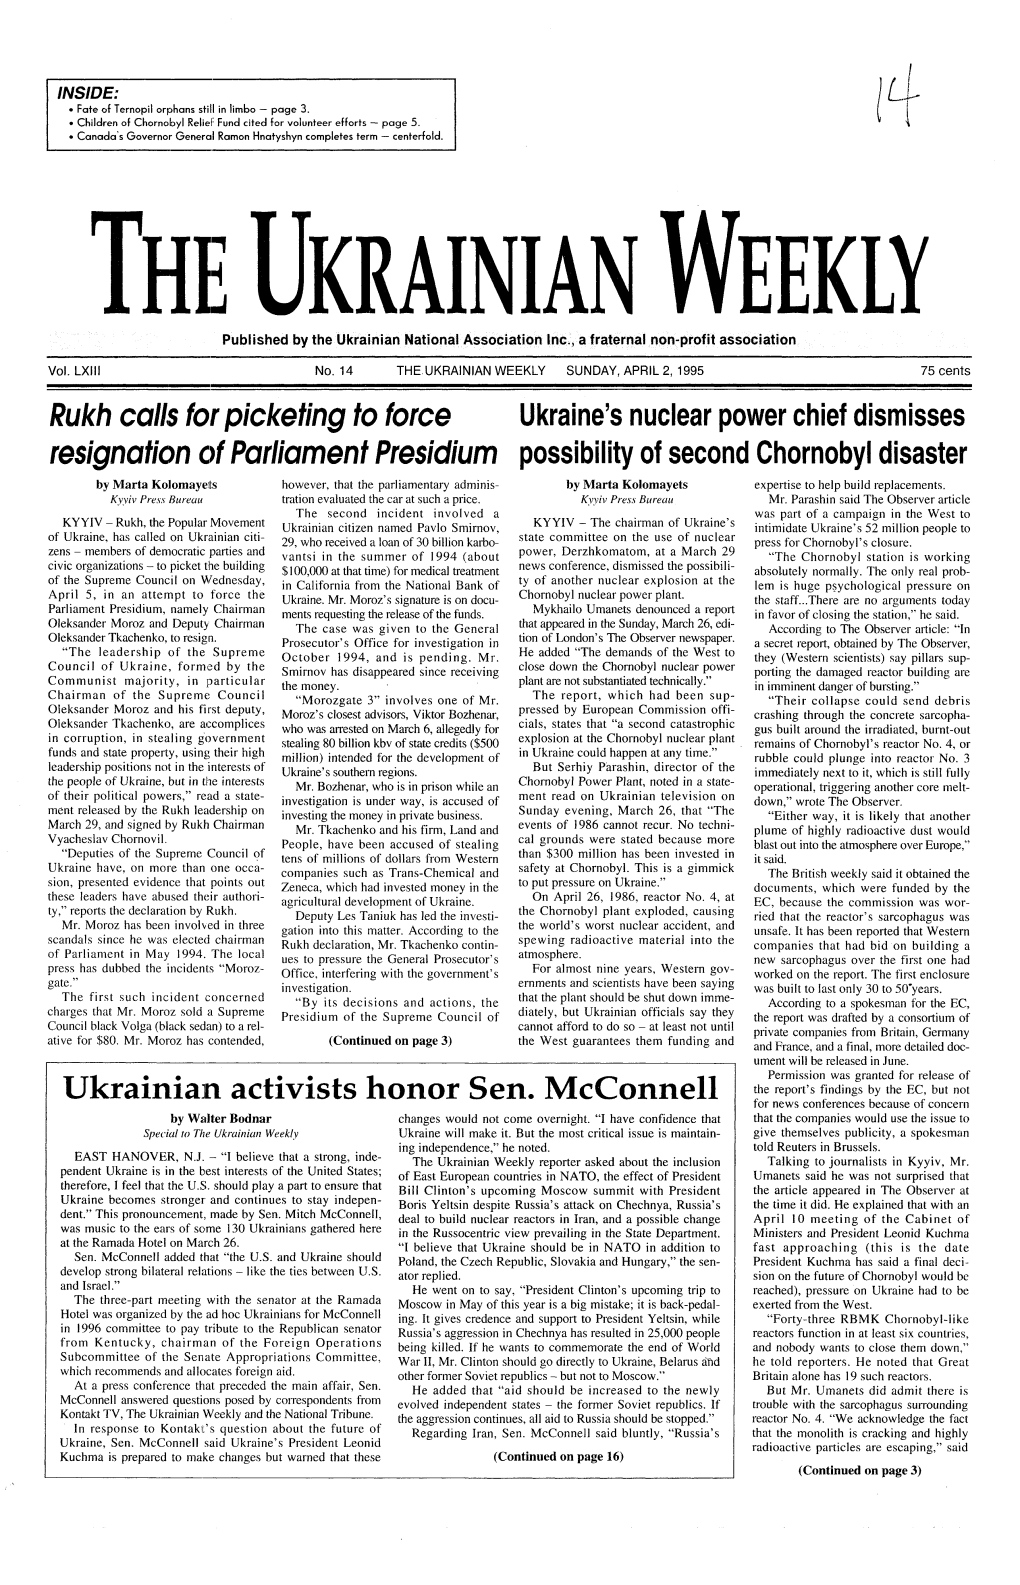 The Ukrainian Weekly 1995, No.14